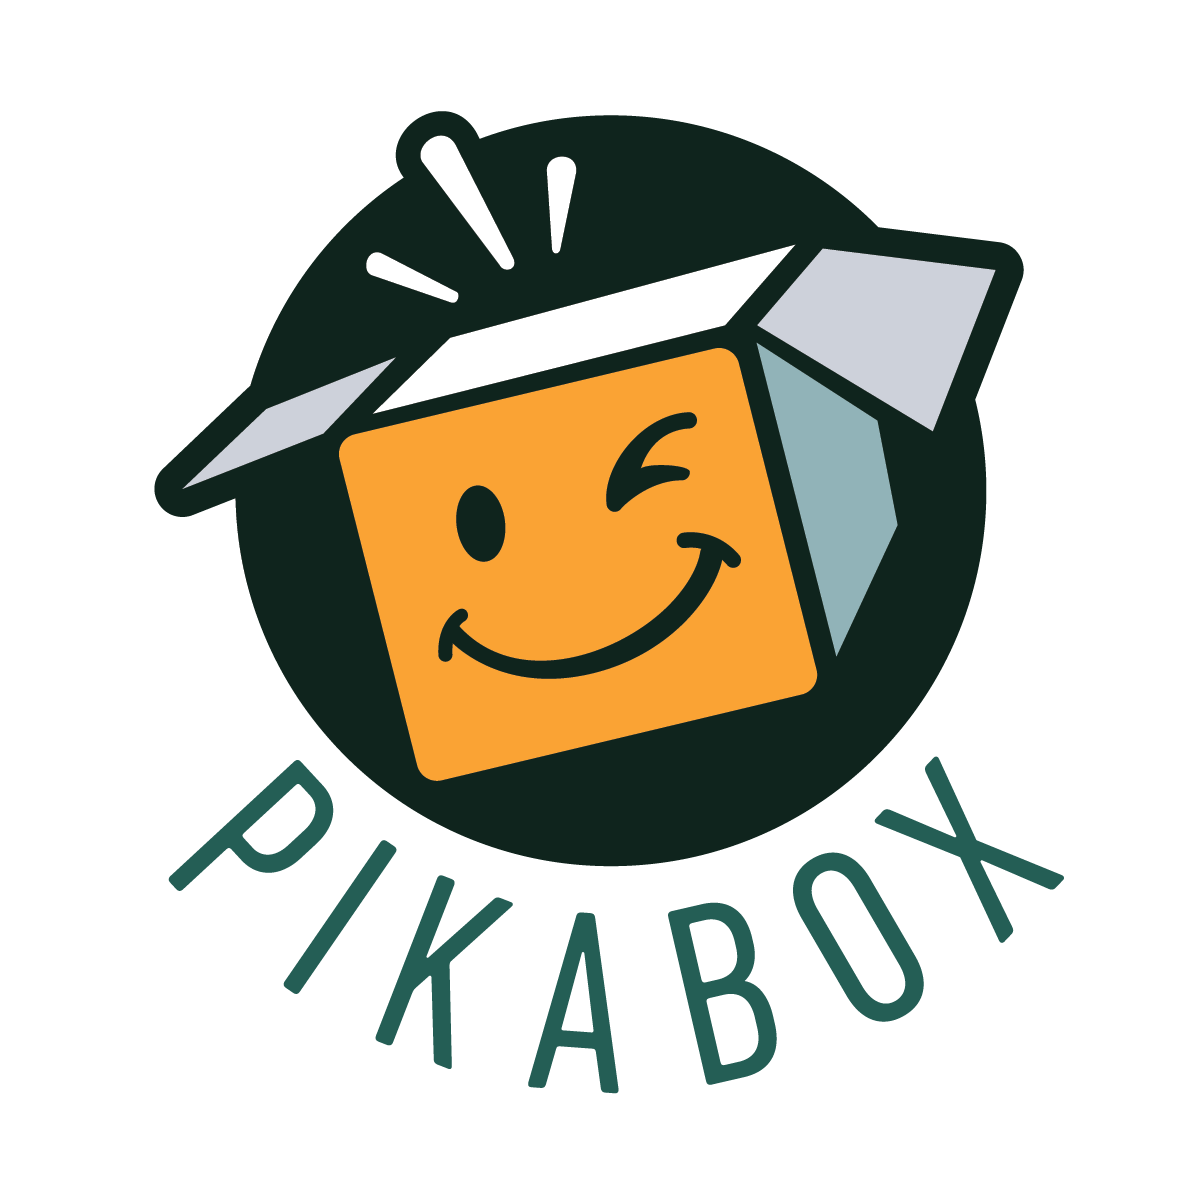 Pikabox